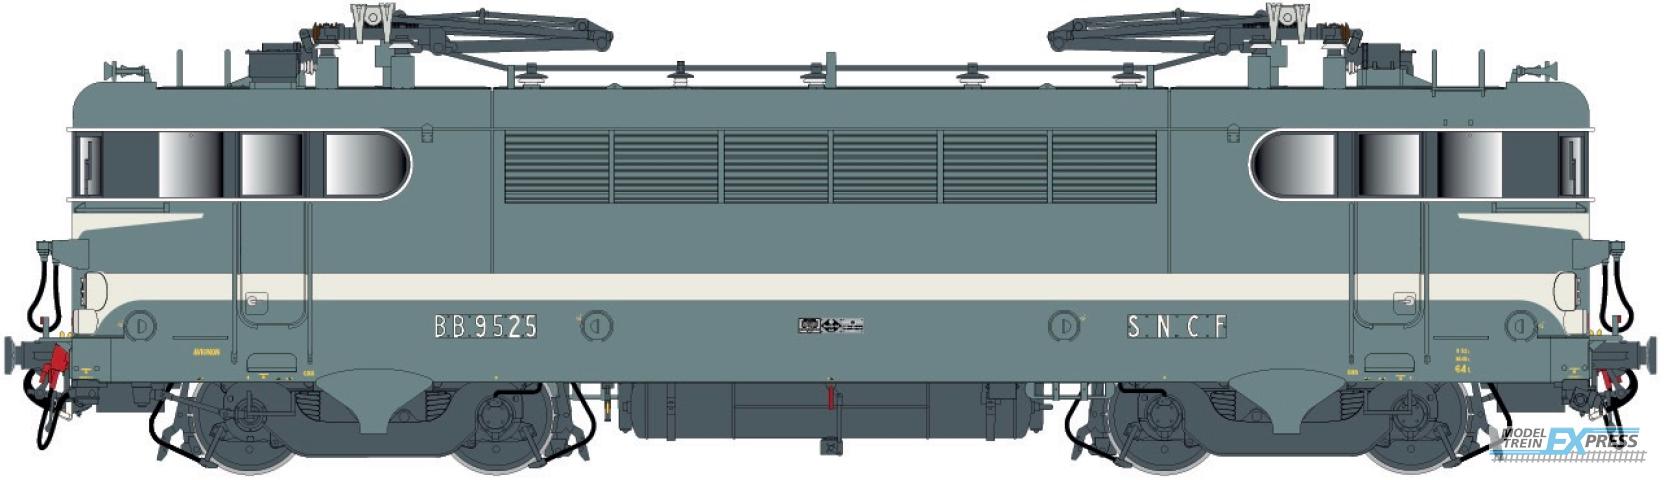 LS Models 10250S BB 9525, Béziers-livrei, brede witte lijn, geschilderde snorren, depot Avignon  /  Ep. IV  /  SNCF  /  HO  /  DC SOUND  /  1 P.